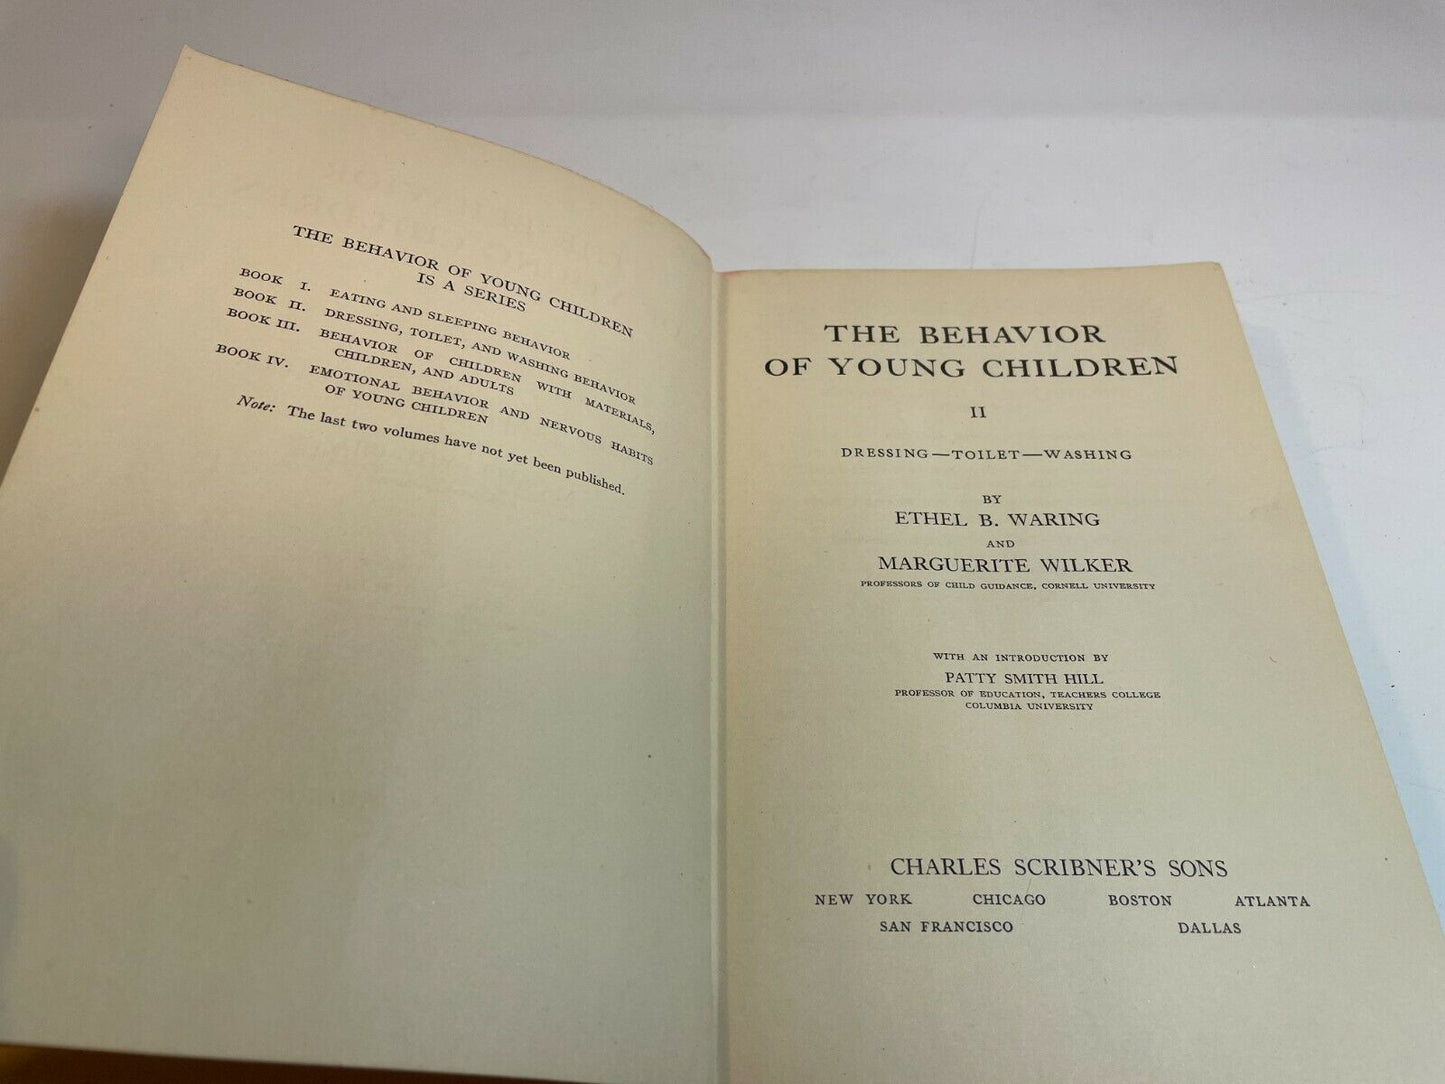 The Behavior of Young Children, Ethel Waring & Marguerite Walker, (1930) HC A2